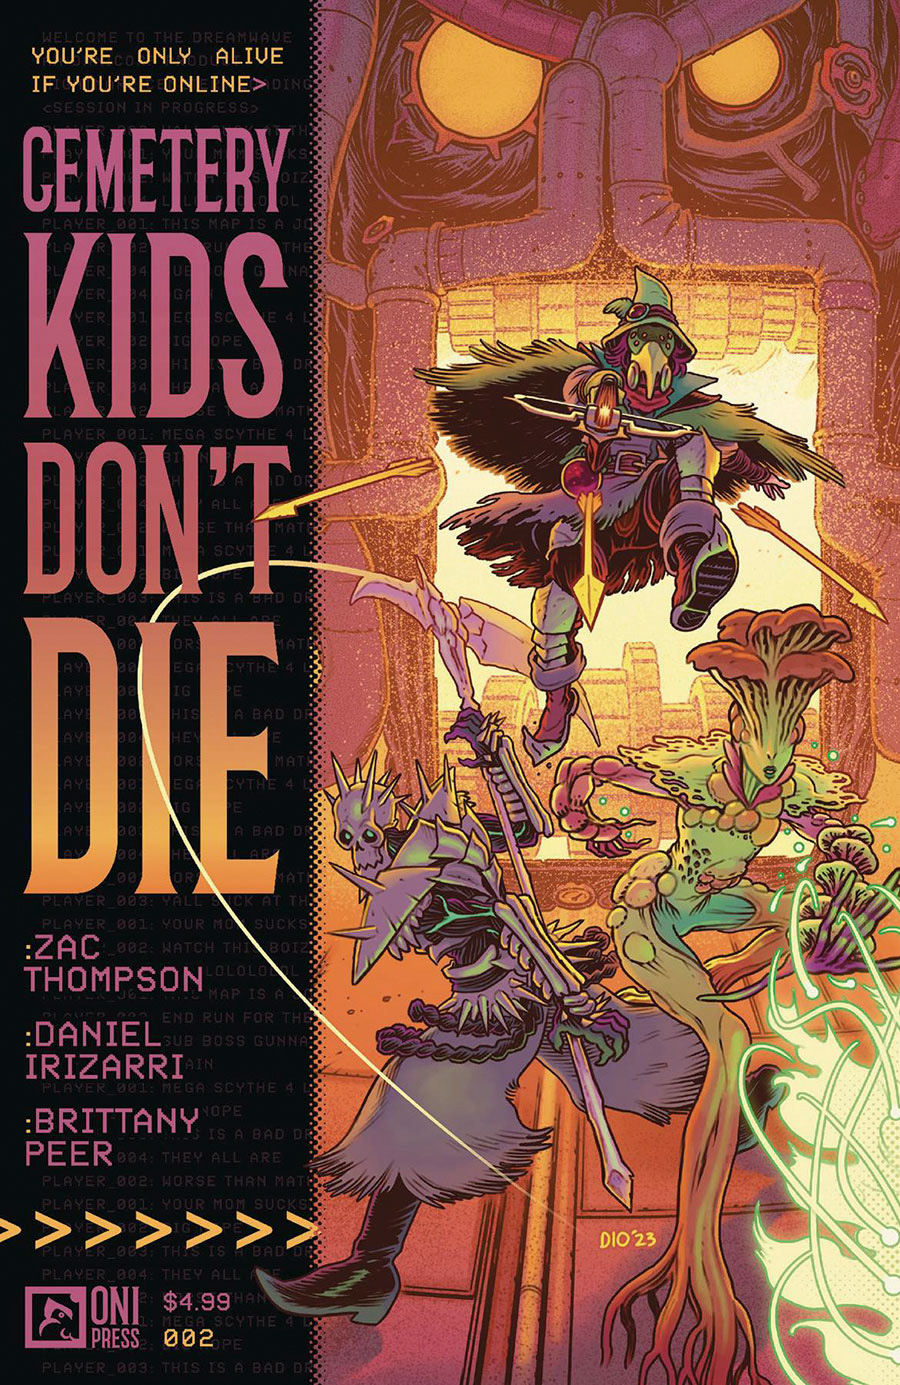 Cemetery Kids Dont Die #2 Cover A Regular Daniel Irizarri Cover